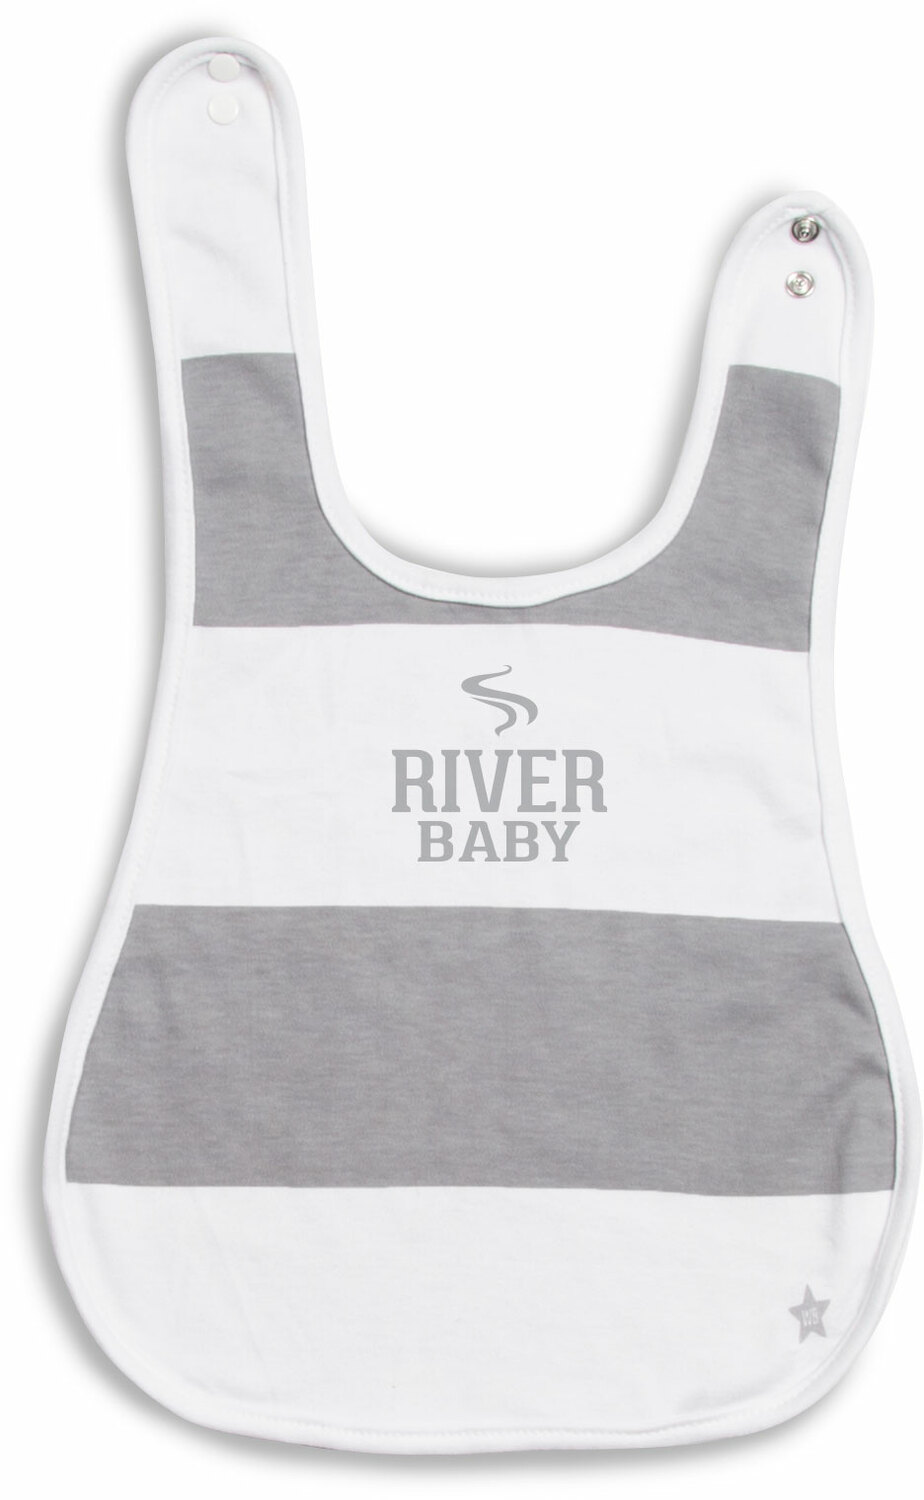 River Baby by We Baby - River Baby - Reversible Bib
(6M - 3 Years)